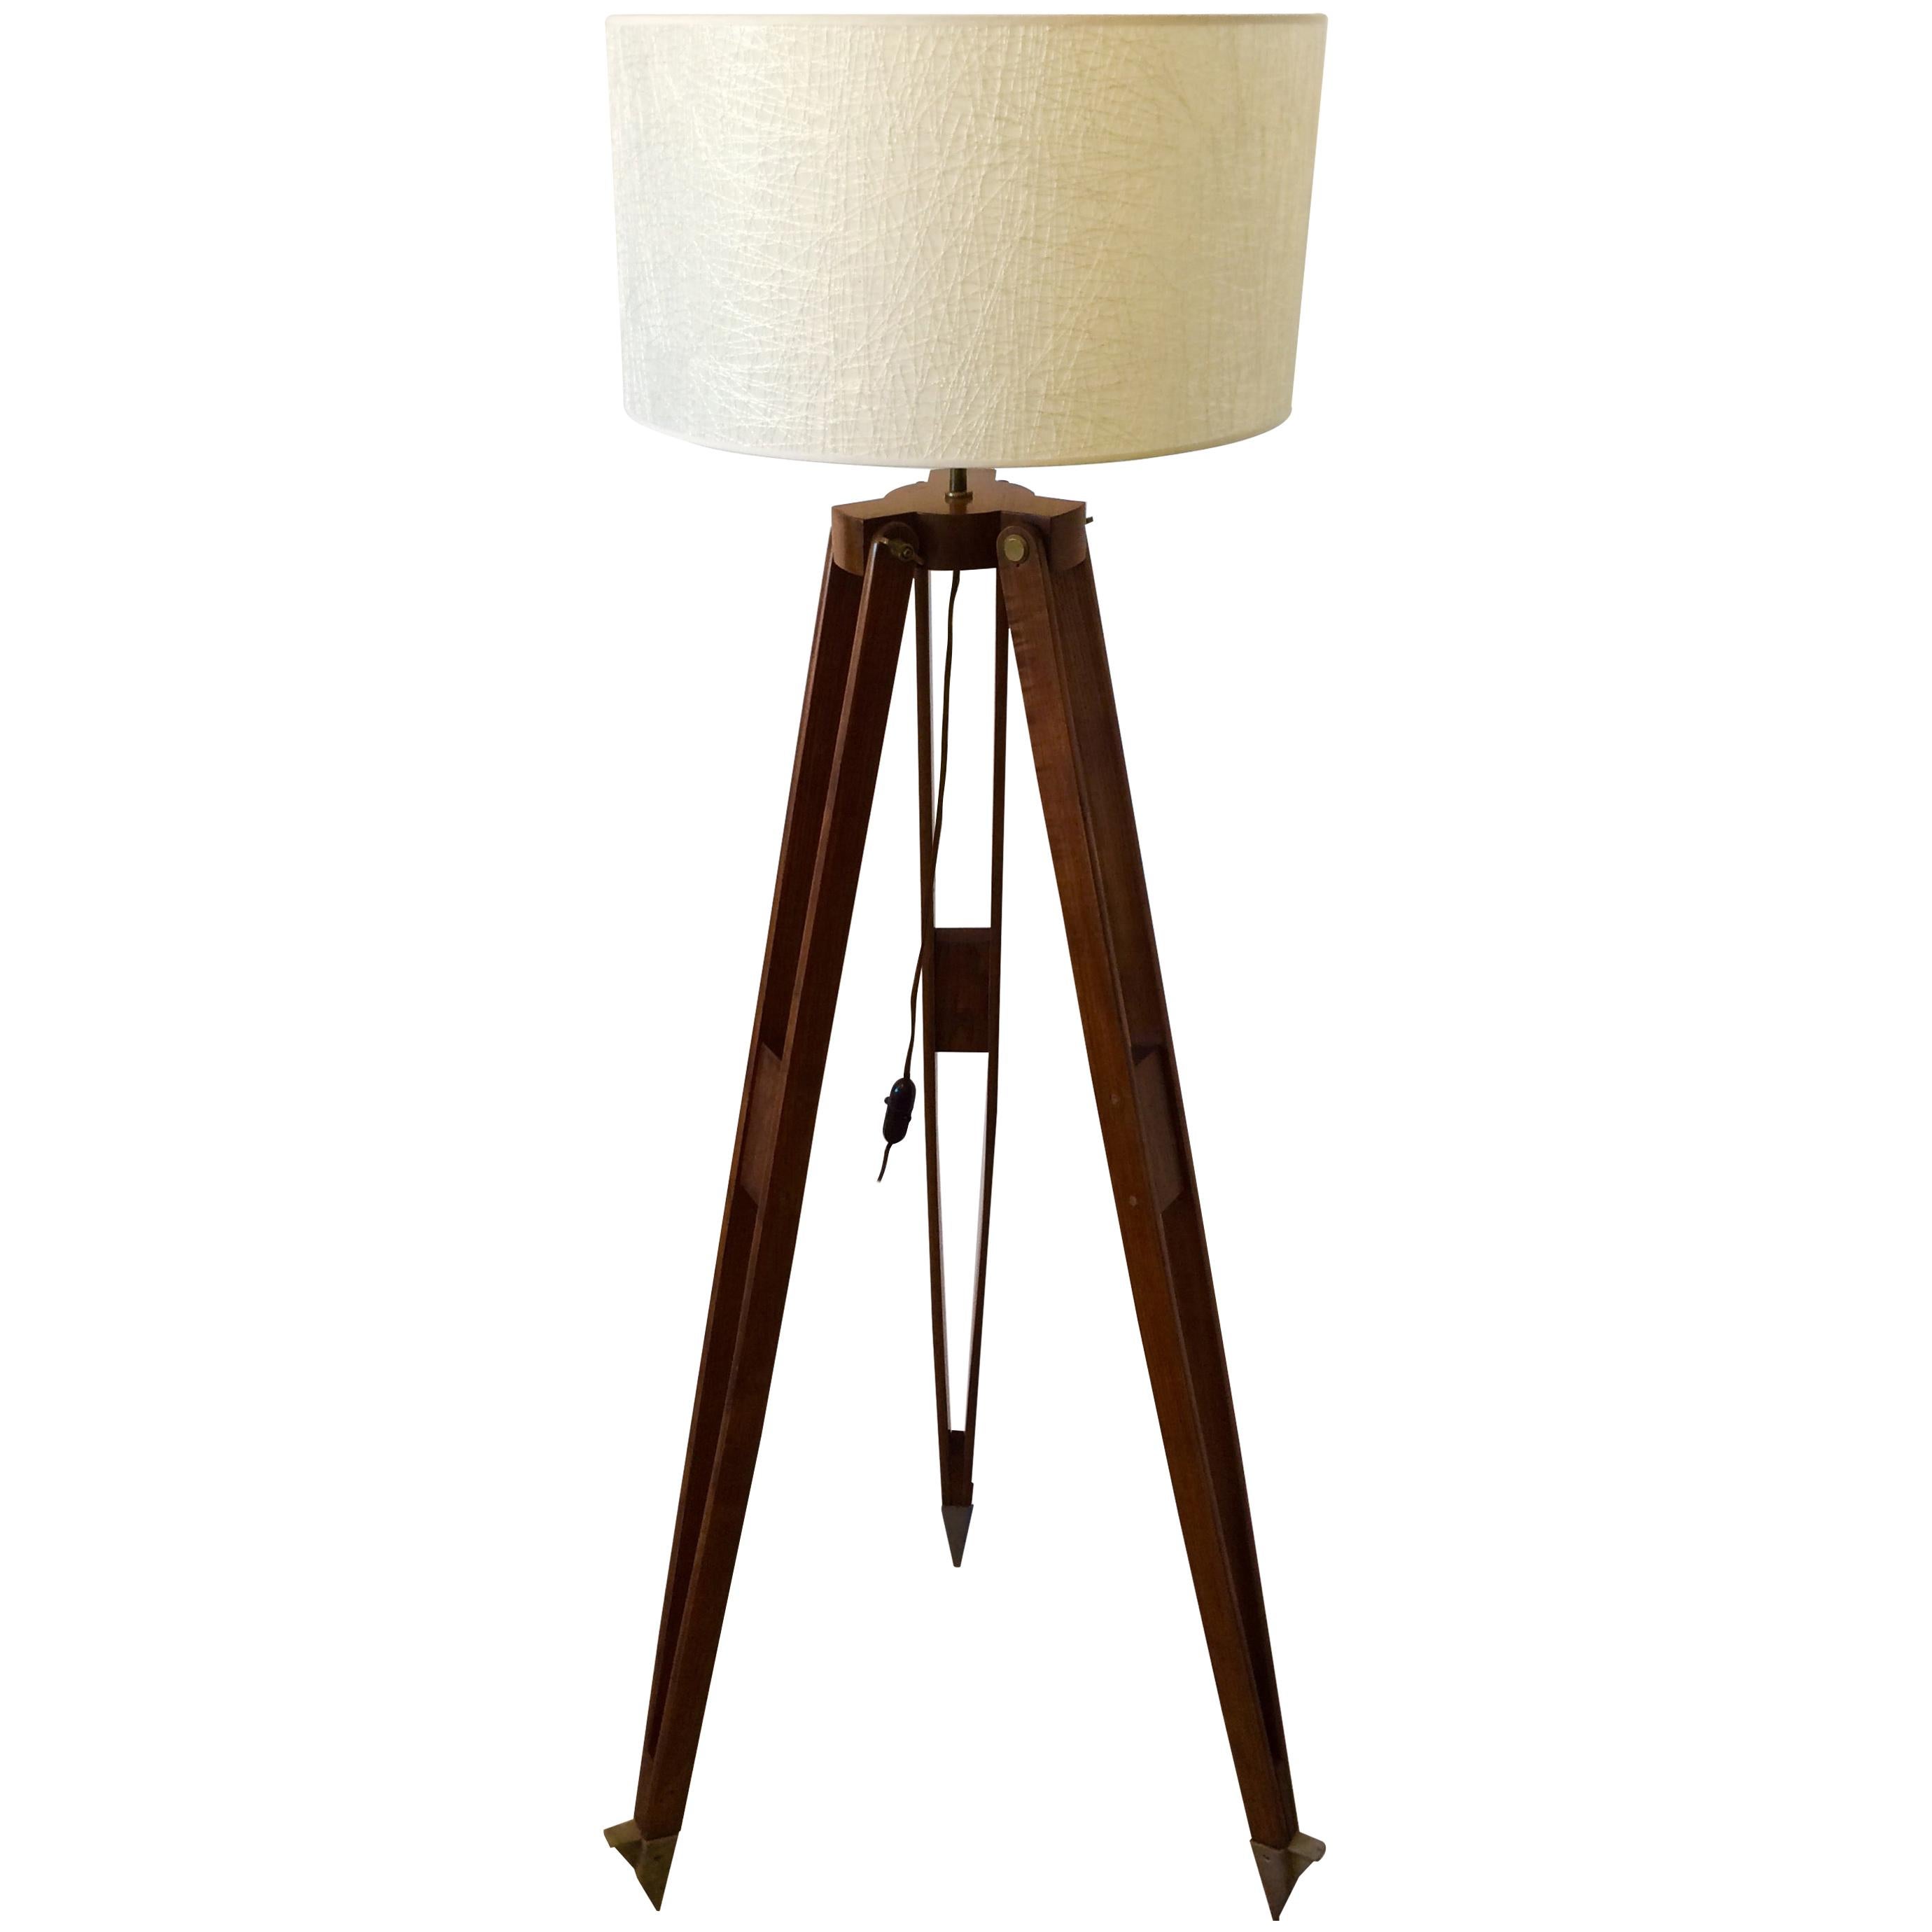 Wooden Tripod Floor Lamp by H. Morin, Paris